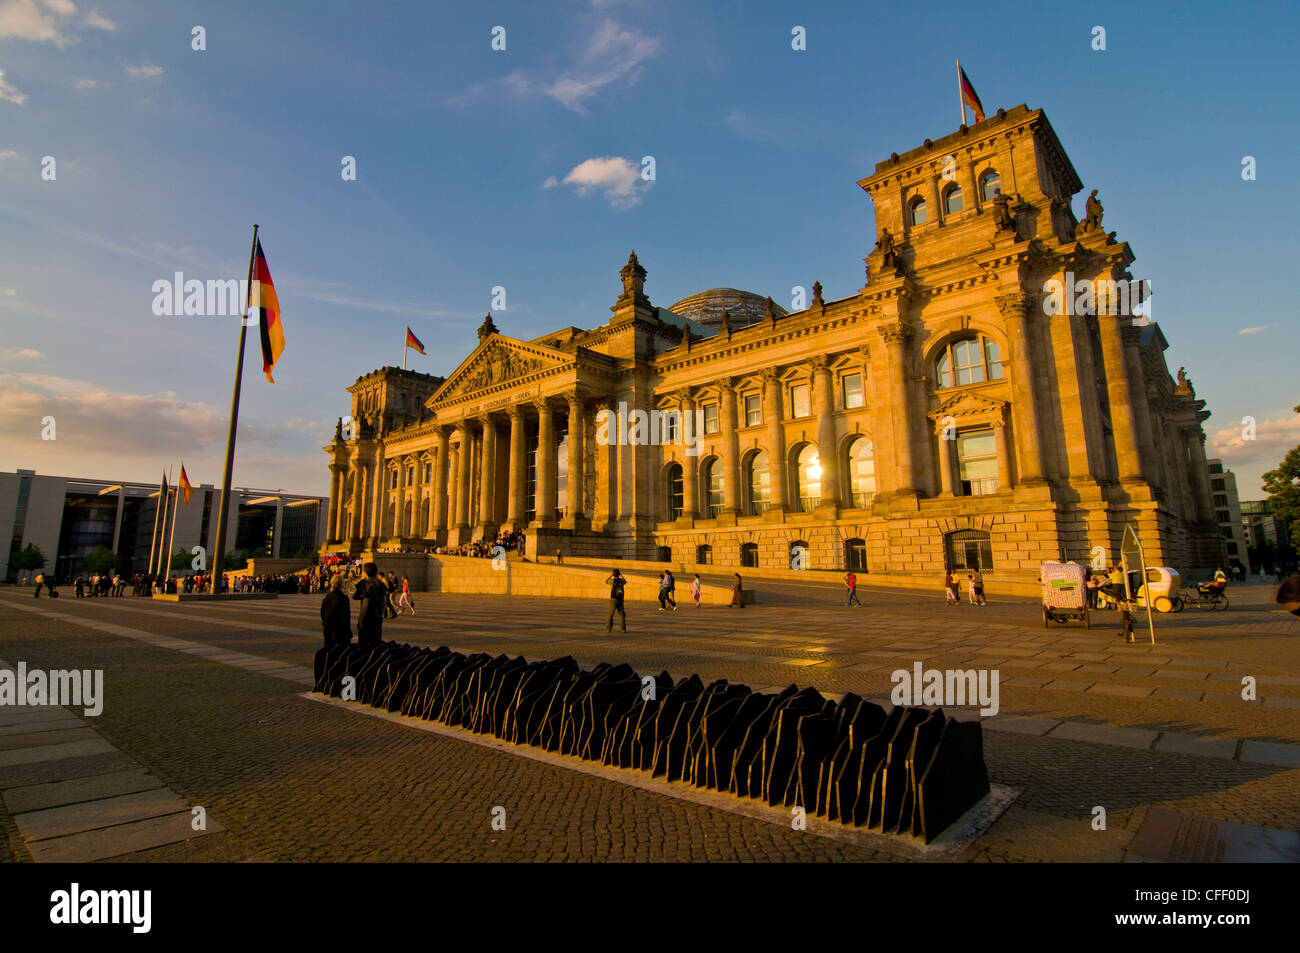 Le Reichstag, le Parlement allemand à Berlin, Berlin, Germany, Europe Banque D'Images